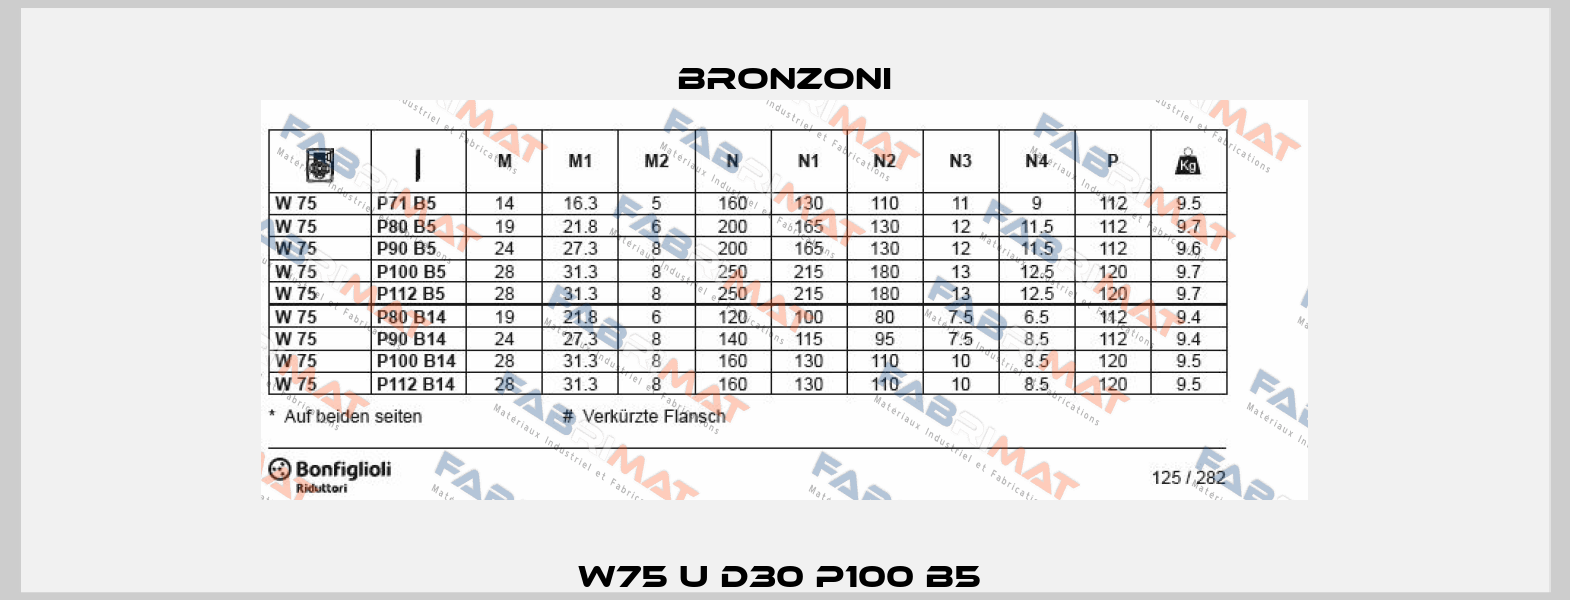 W75 U D30 P100 B5  Bronzoni